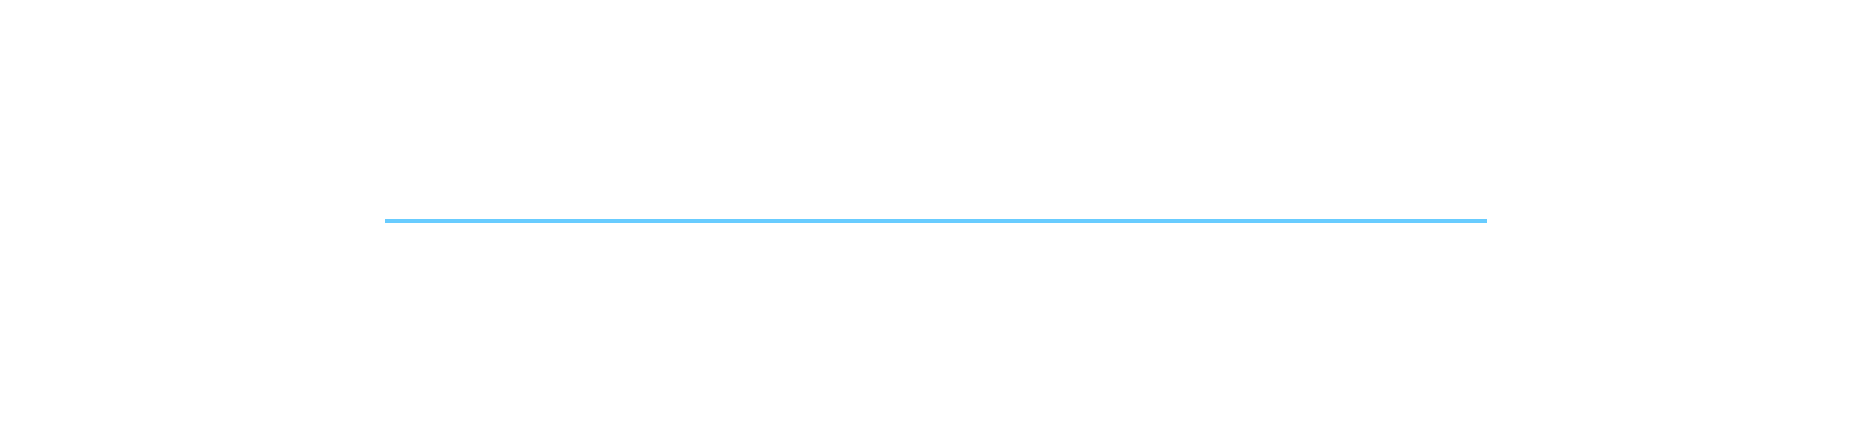 2024 Tech Talk